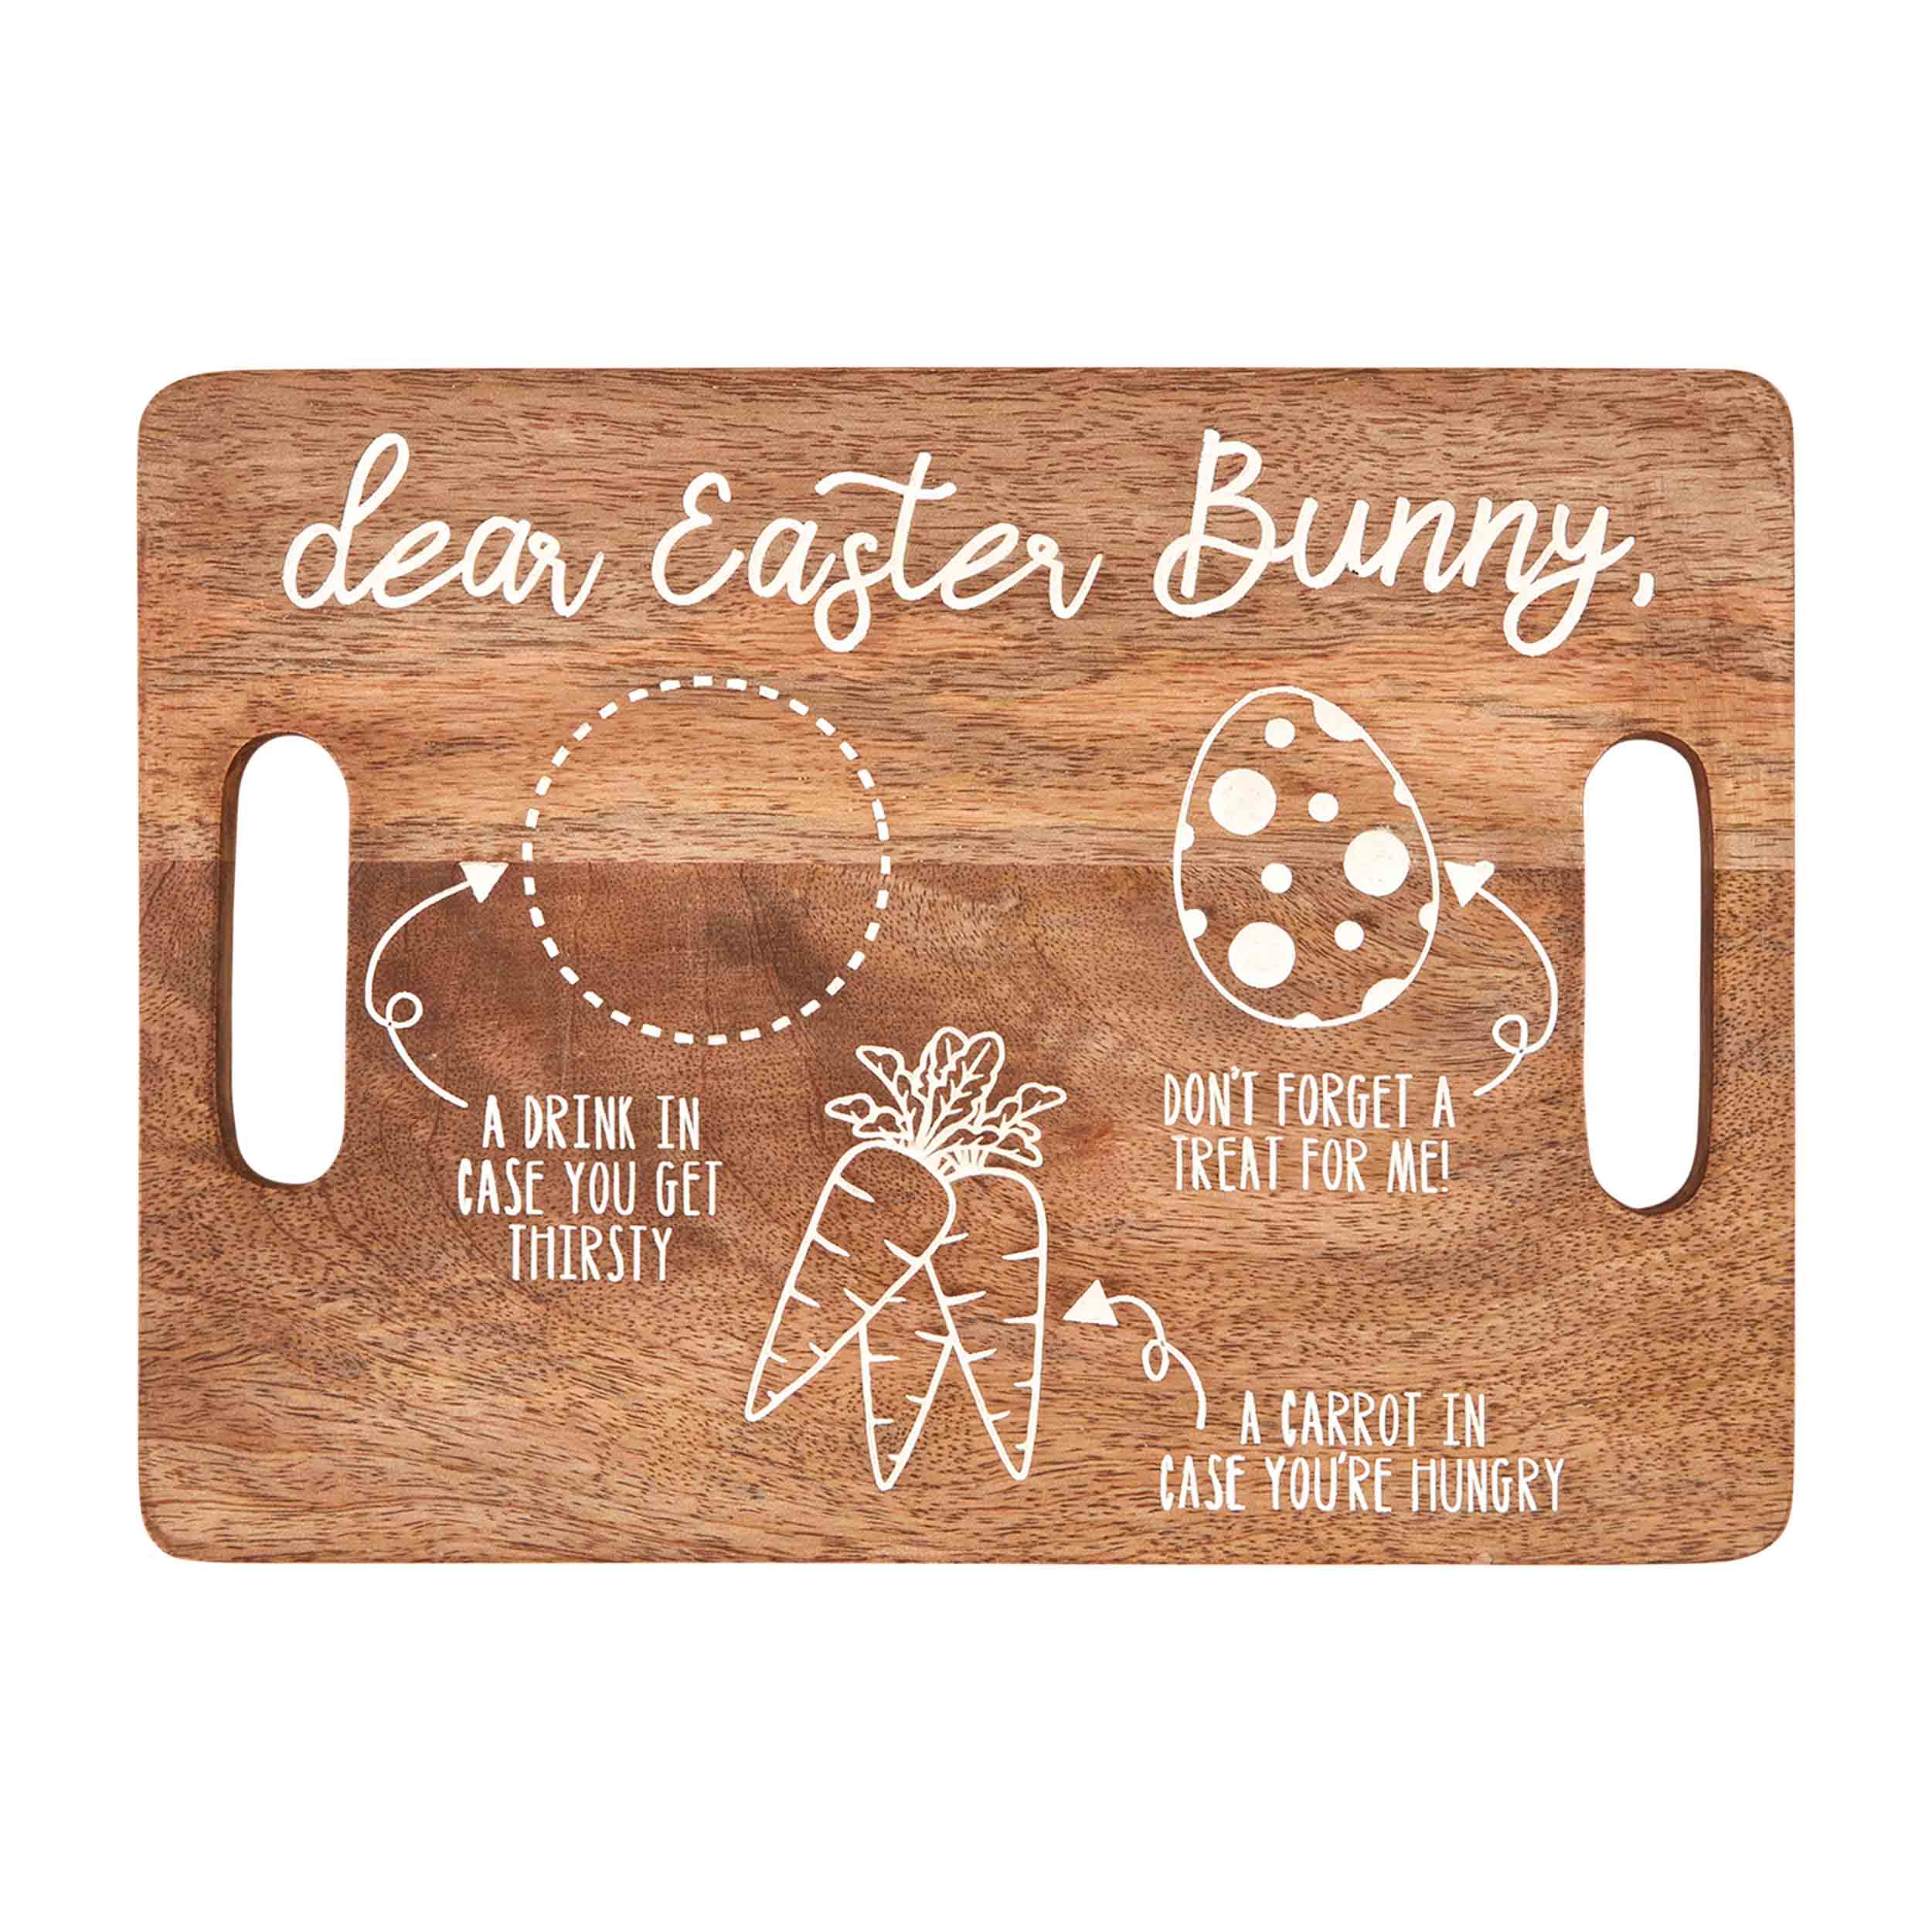 Mudpie Easter Bunny Treat Tray